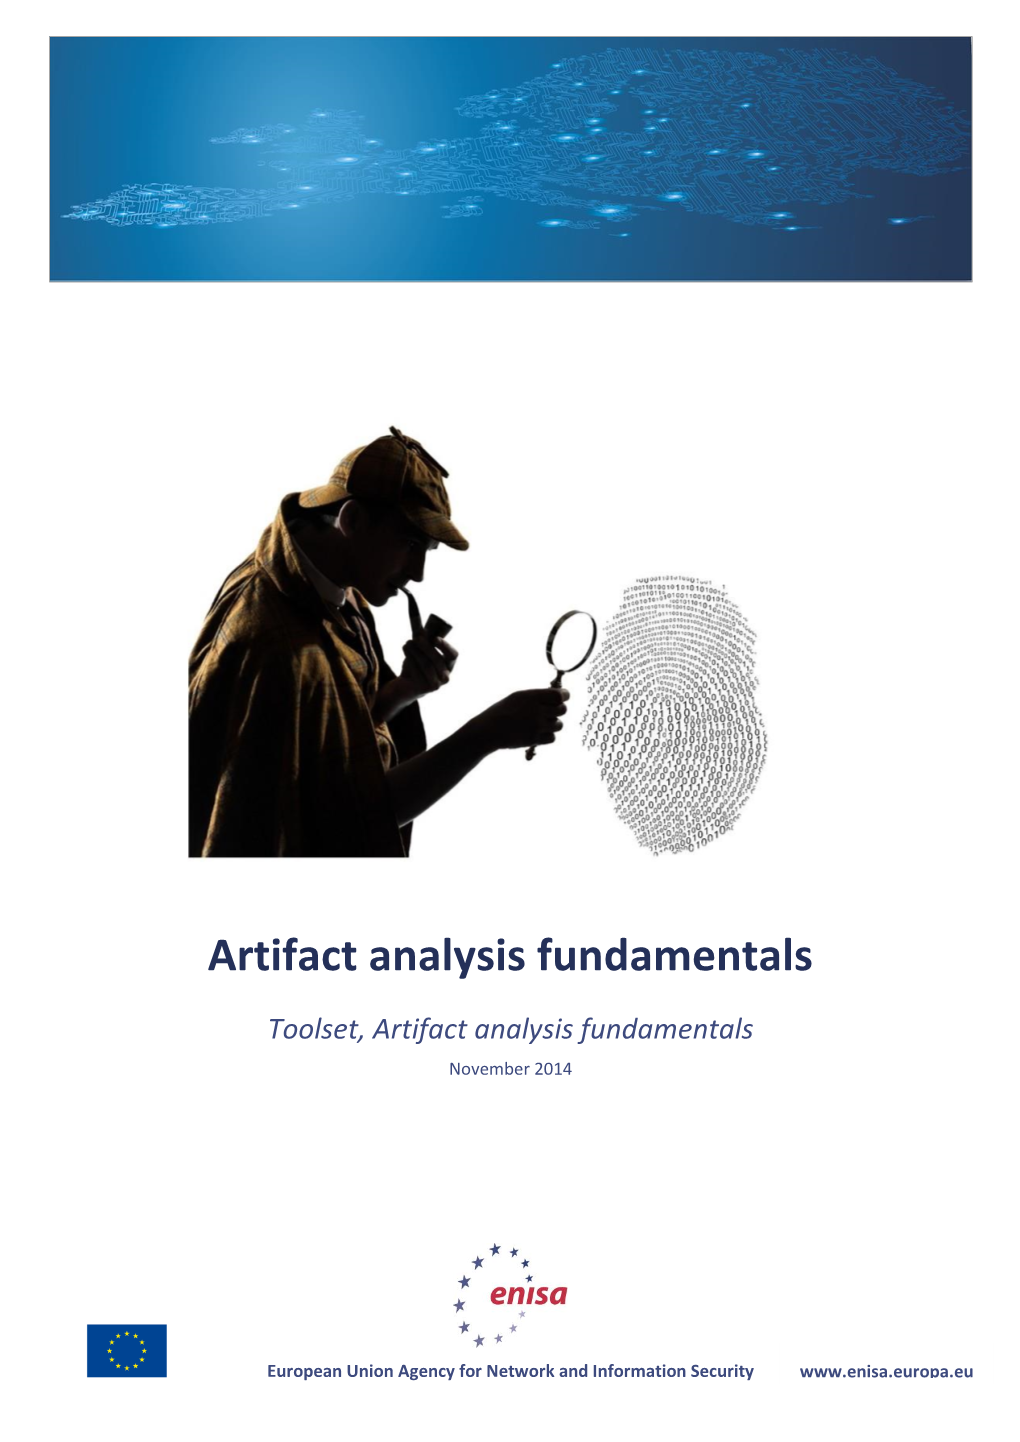 Toolset, Artifact Analysis Fundamentals November 2014